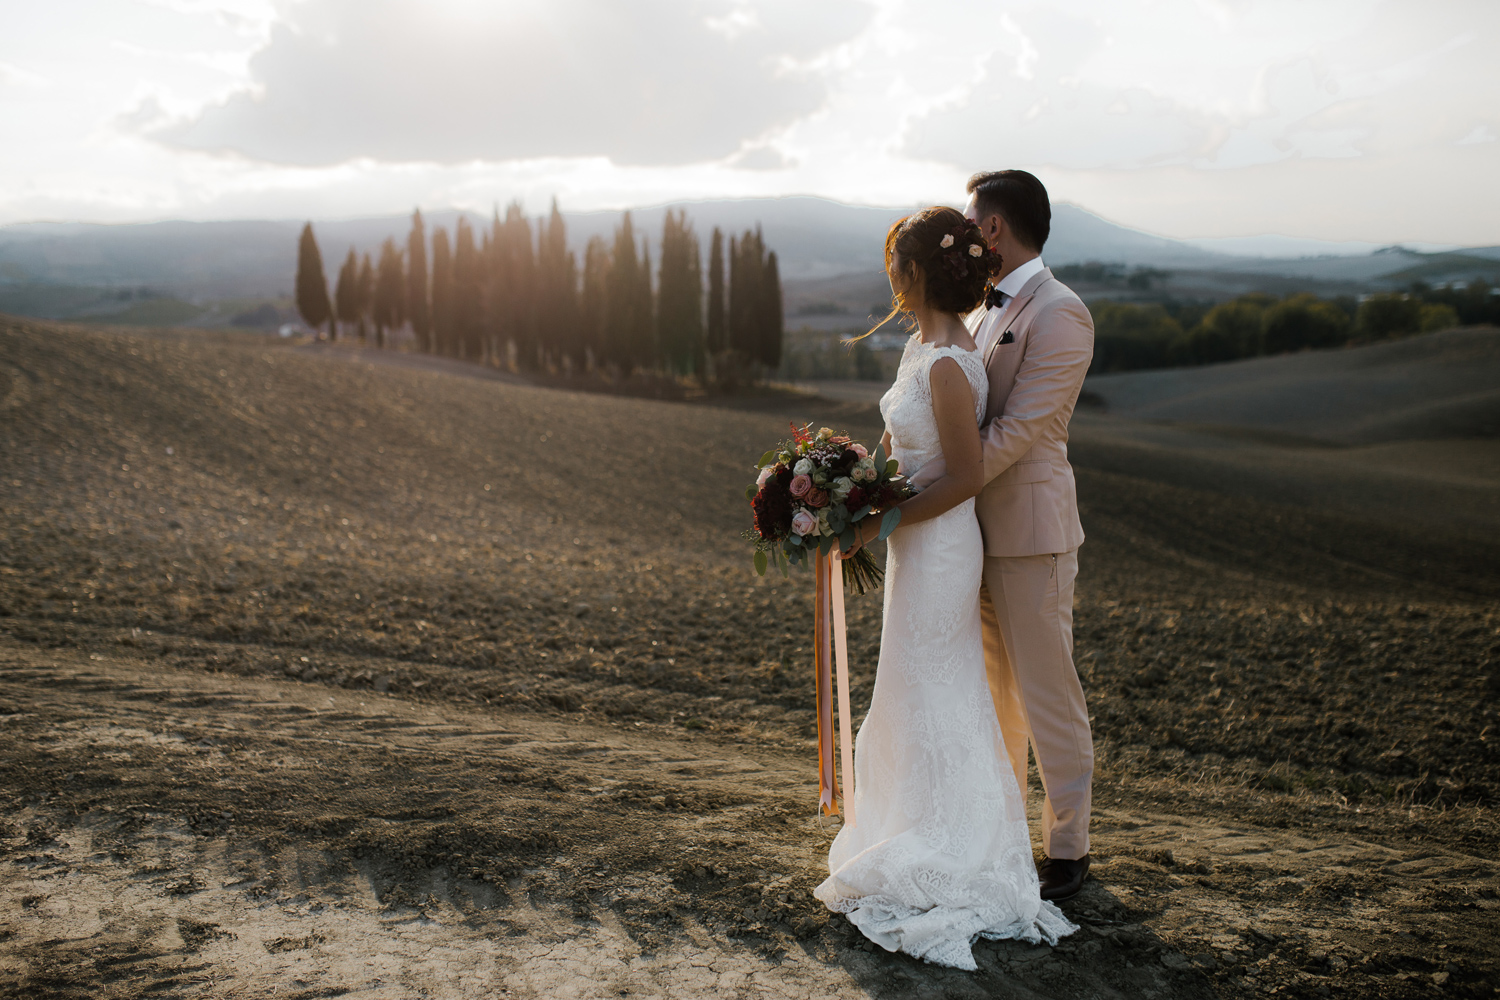 086-wedding-photographer-italy-tuscany-mindy-eddy.jpg